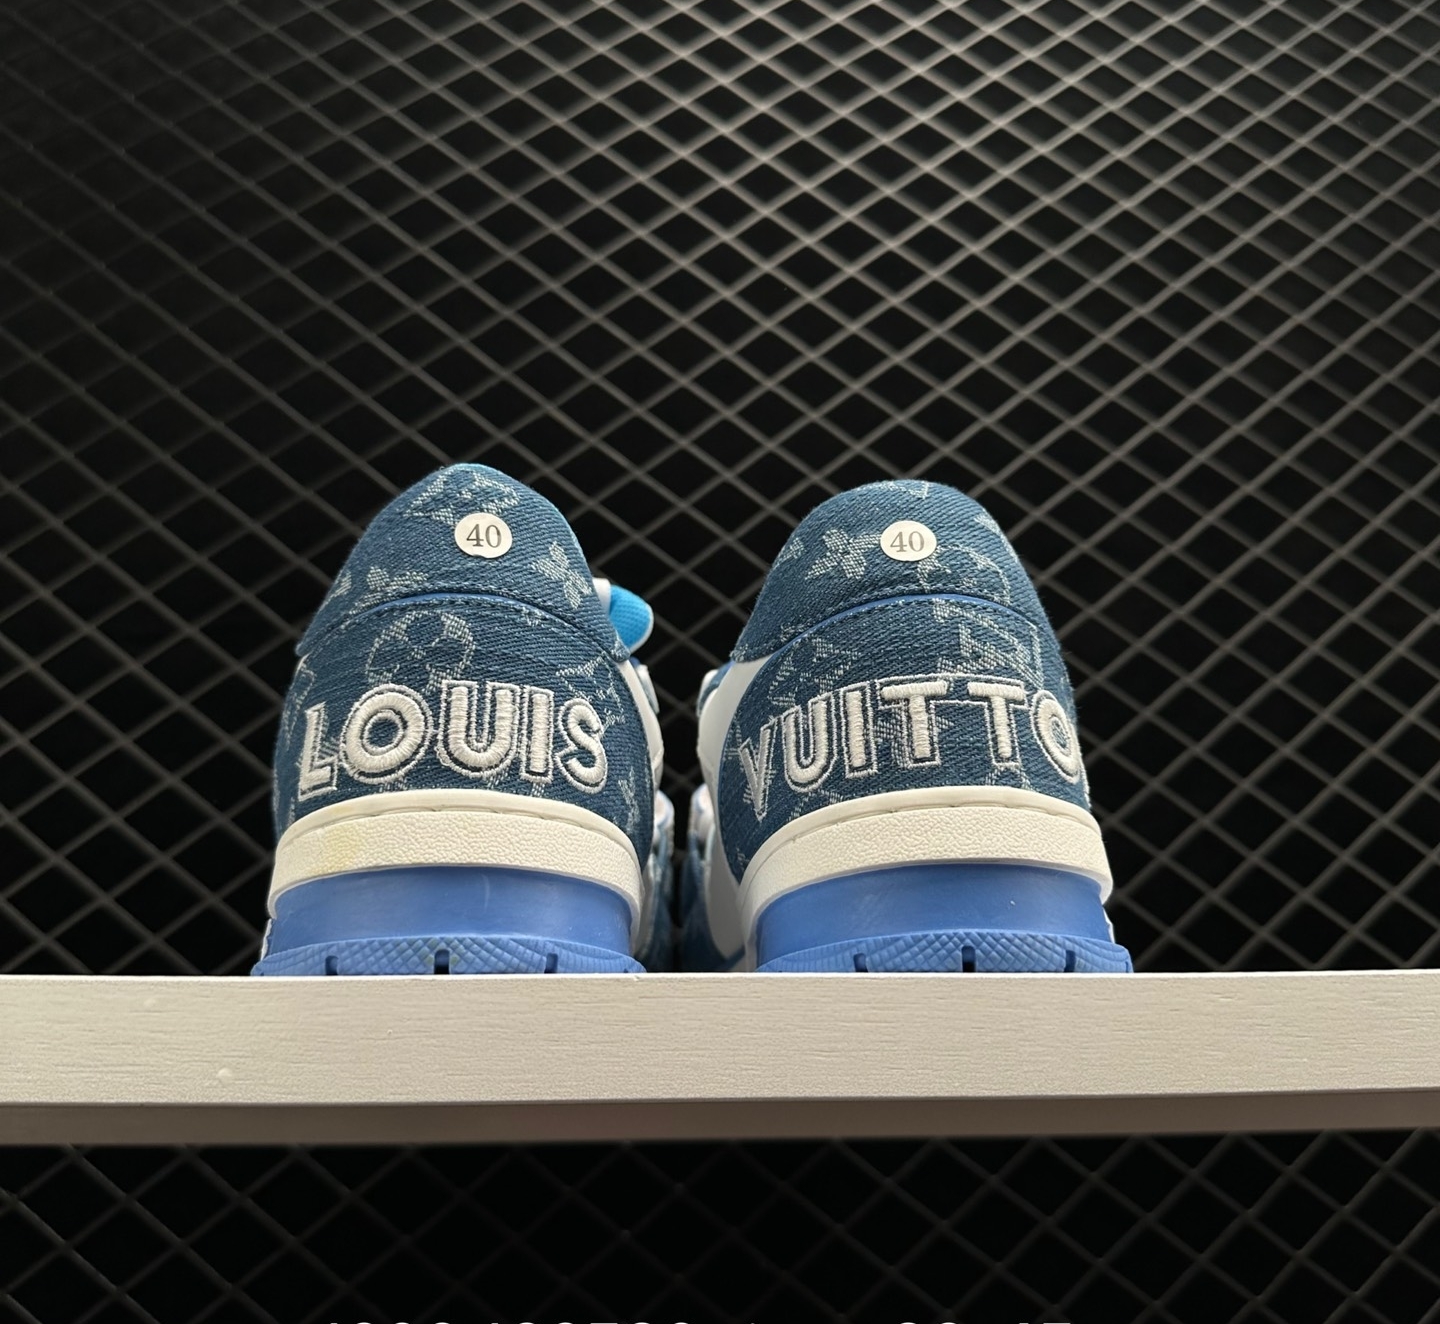 Louis Vuitton Trainer Monogram Denim 1A9ZIH - Iconic luxury denim sneakers for style aficionados